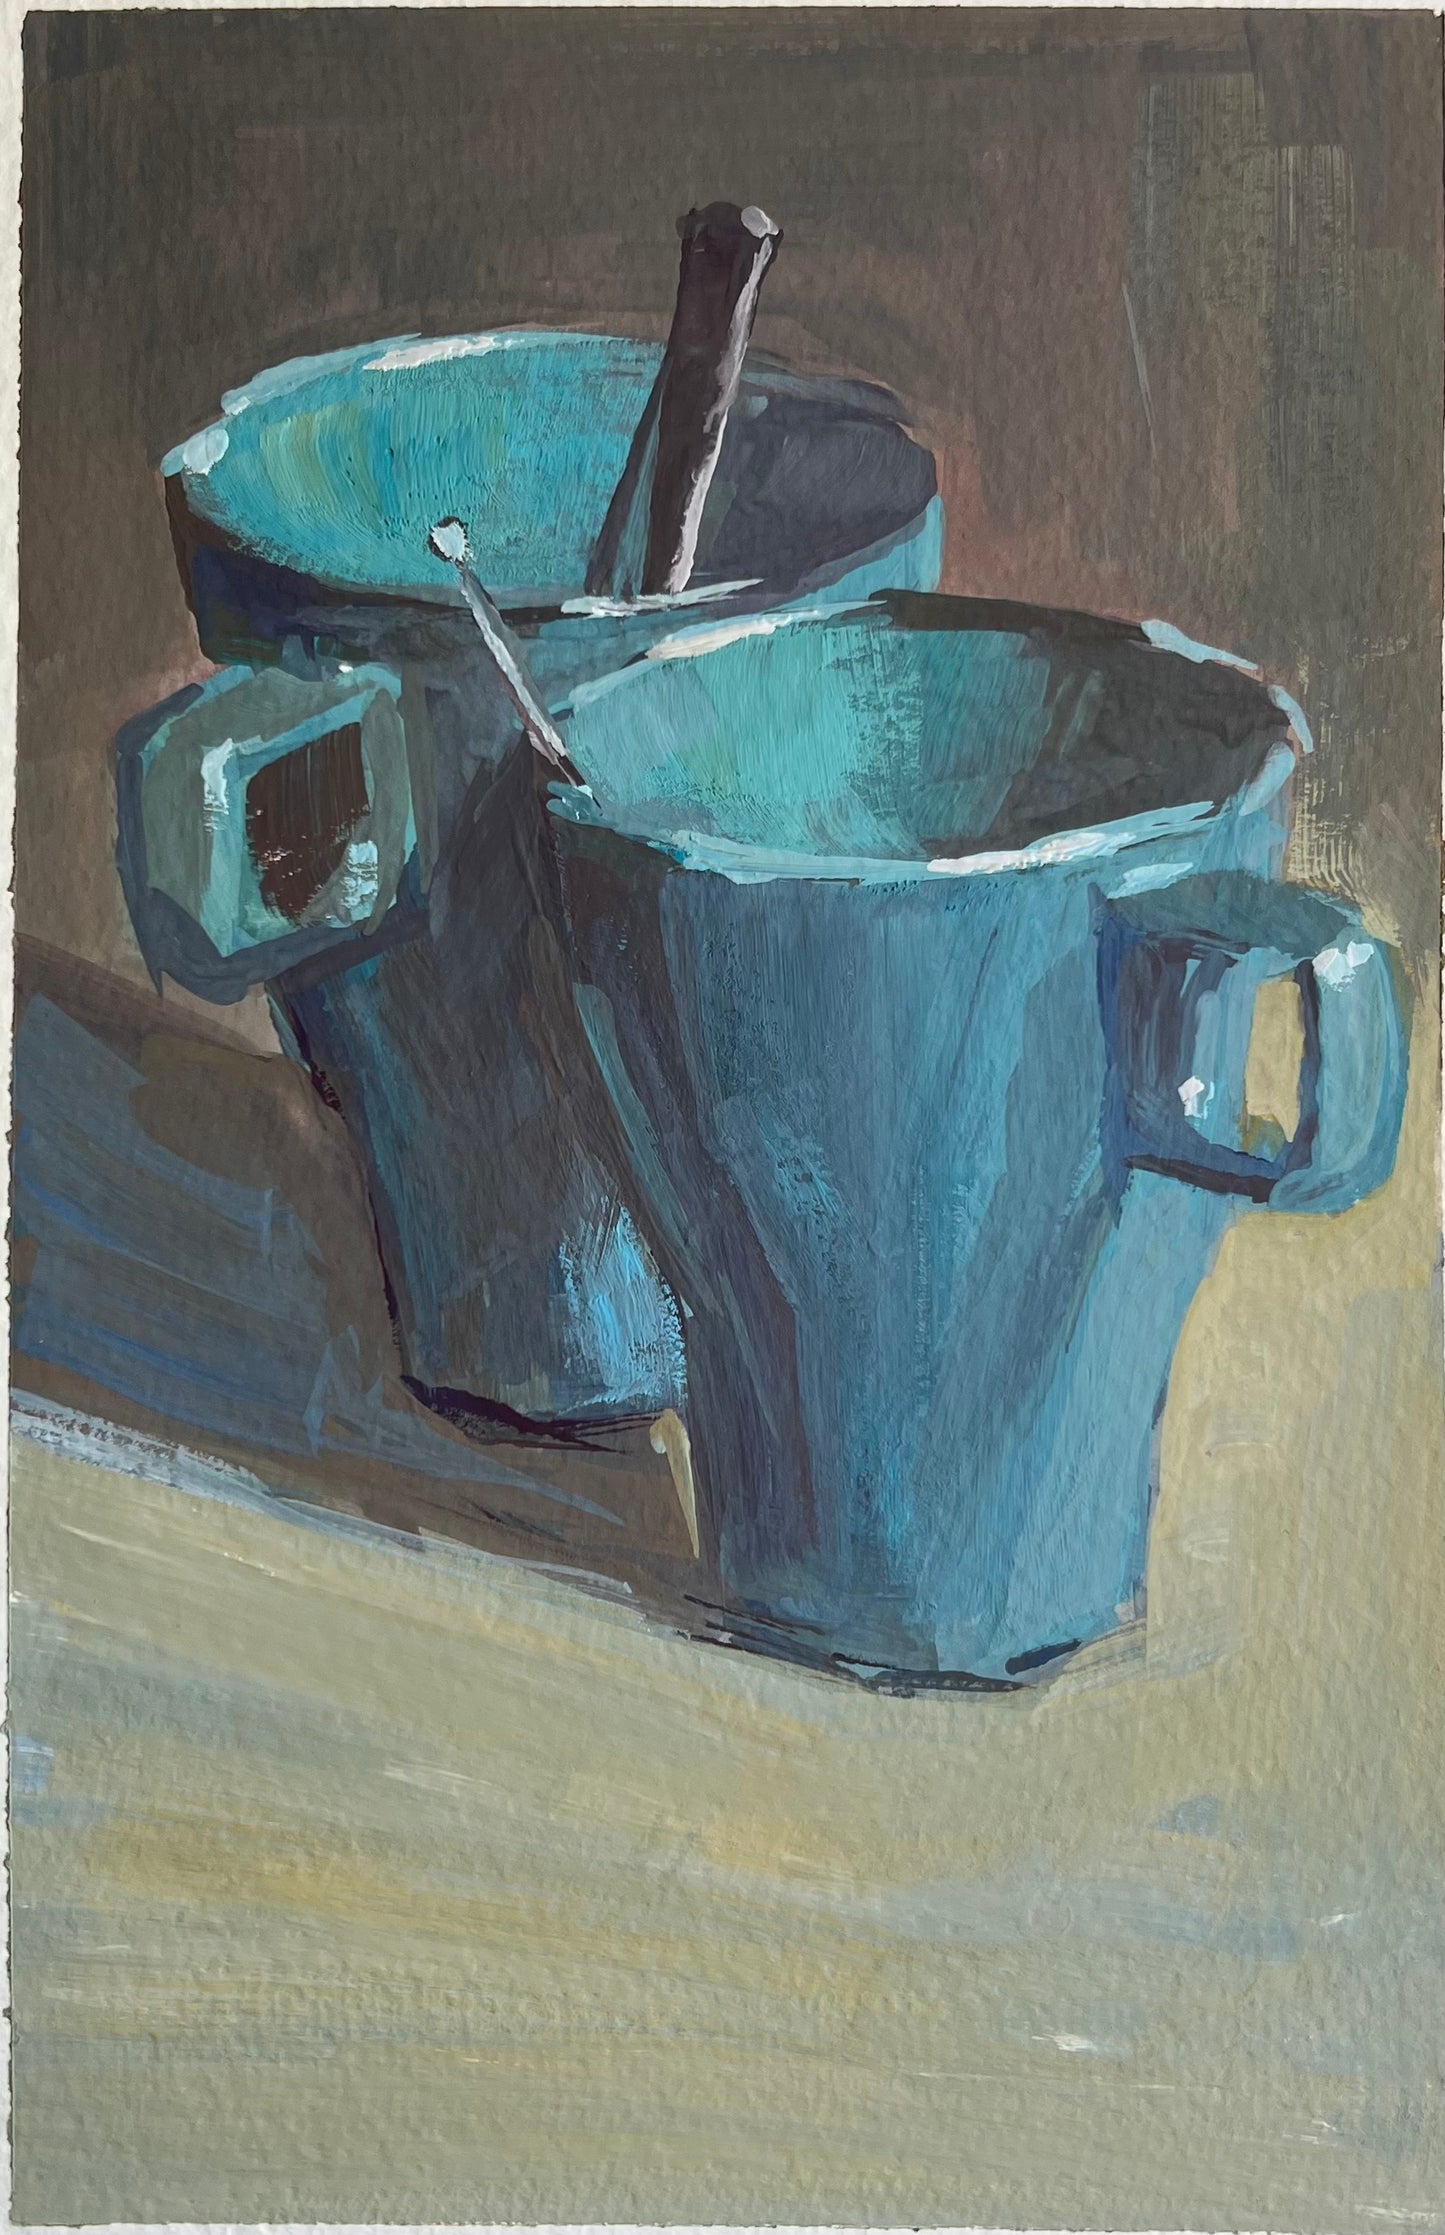 Coffee mugs in gouache